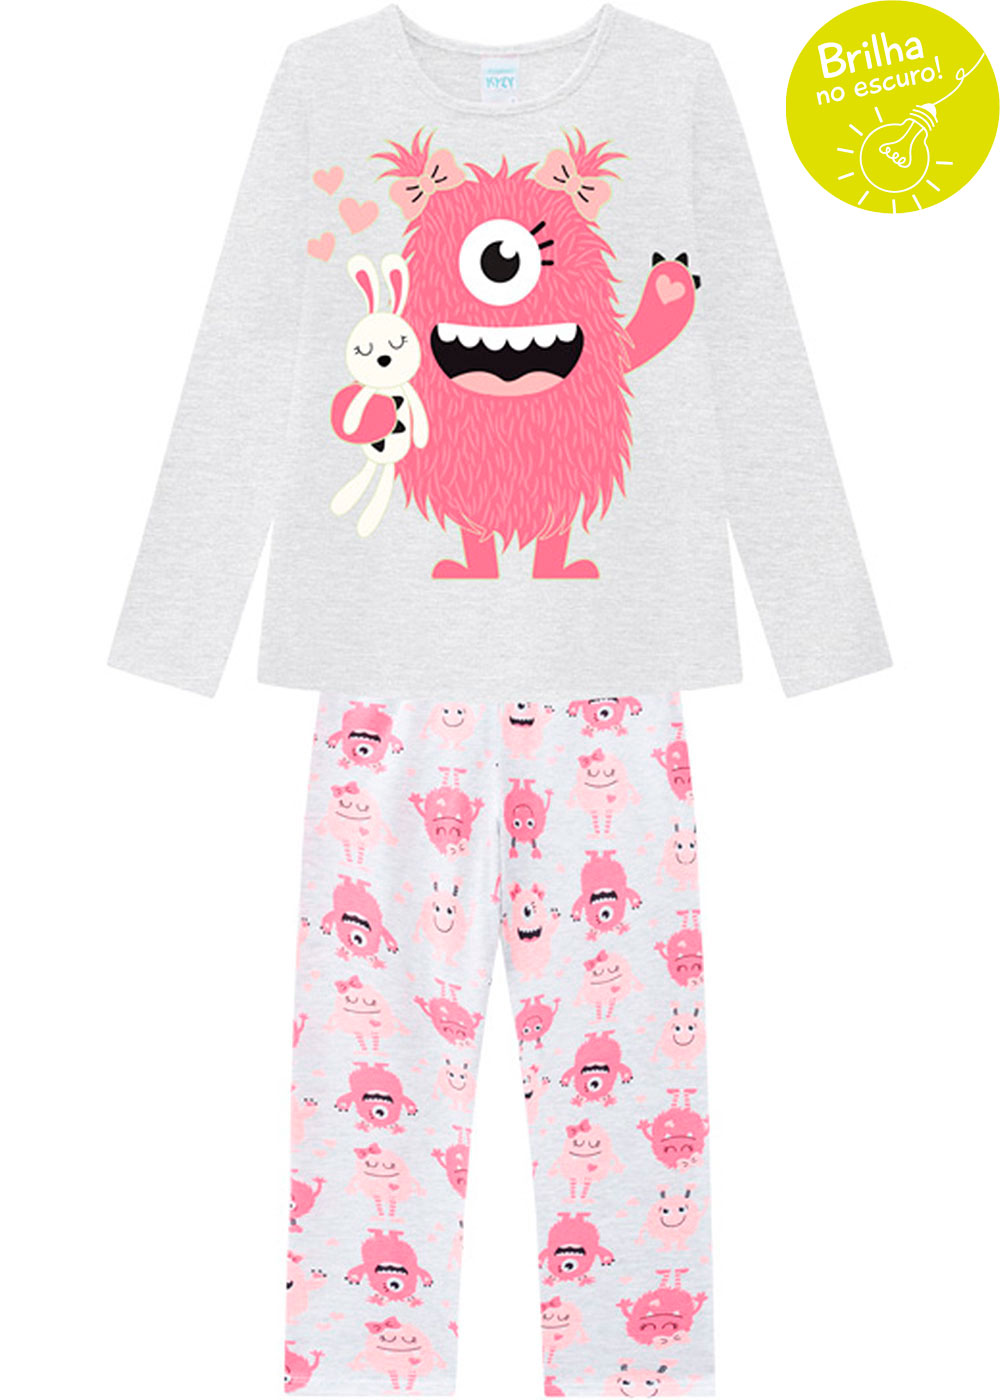 Pijama Infantil Feminino Branco que Brilha no Escuro Inverno Kyly